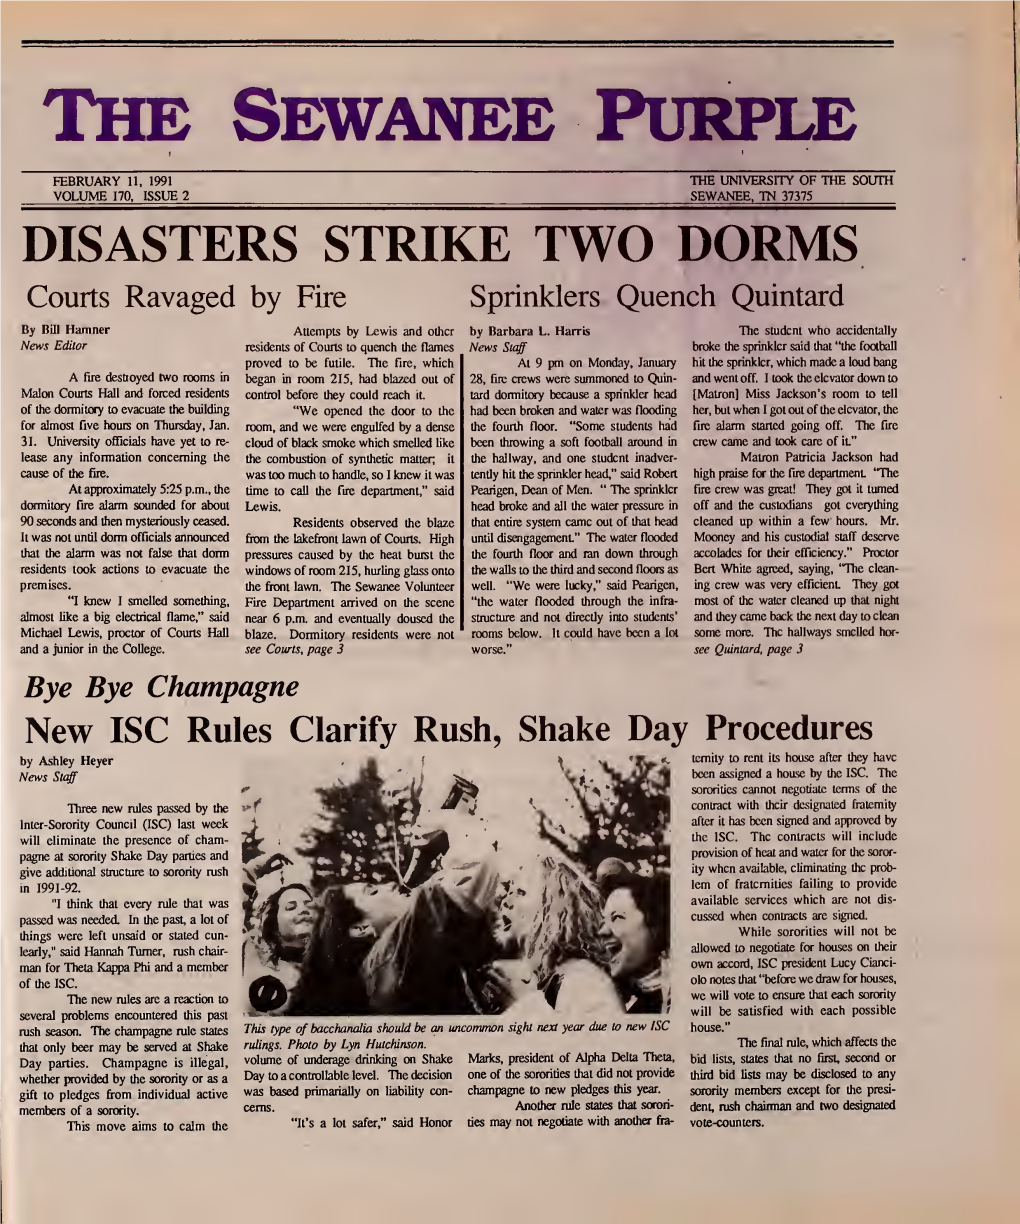 Sewanee Purple,1990-91